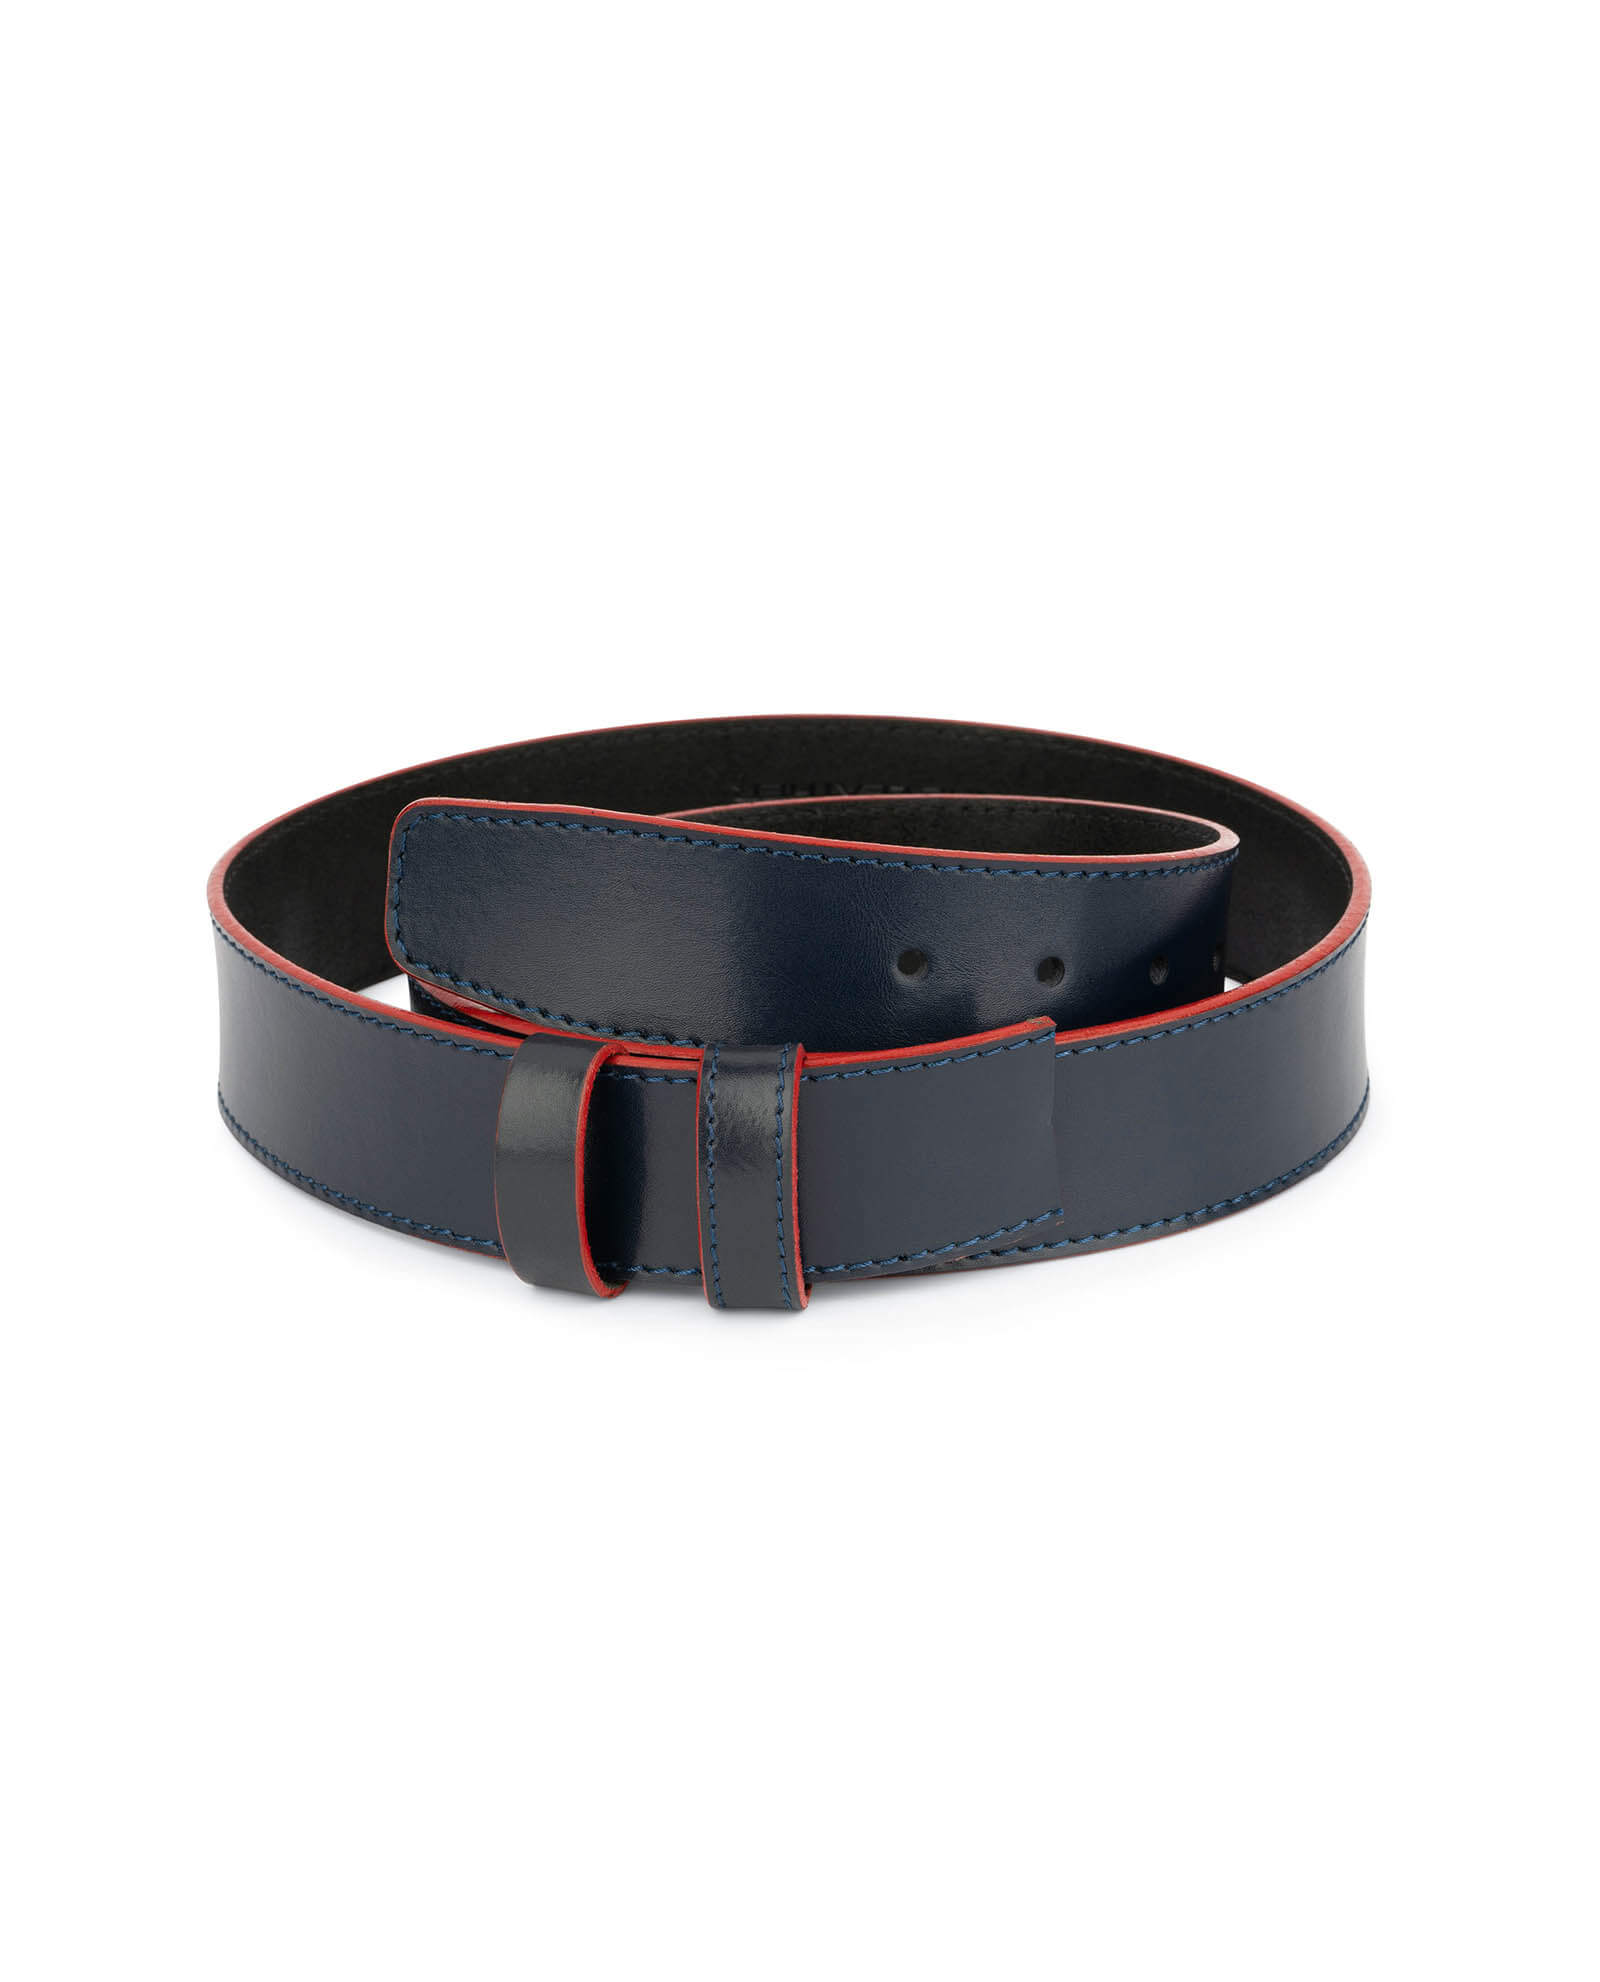 Buy Mens Navy Blue Belt Strap 1.5 Inch | LeatherBeltsOnline.com